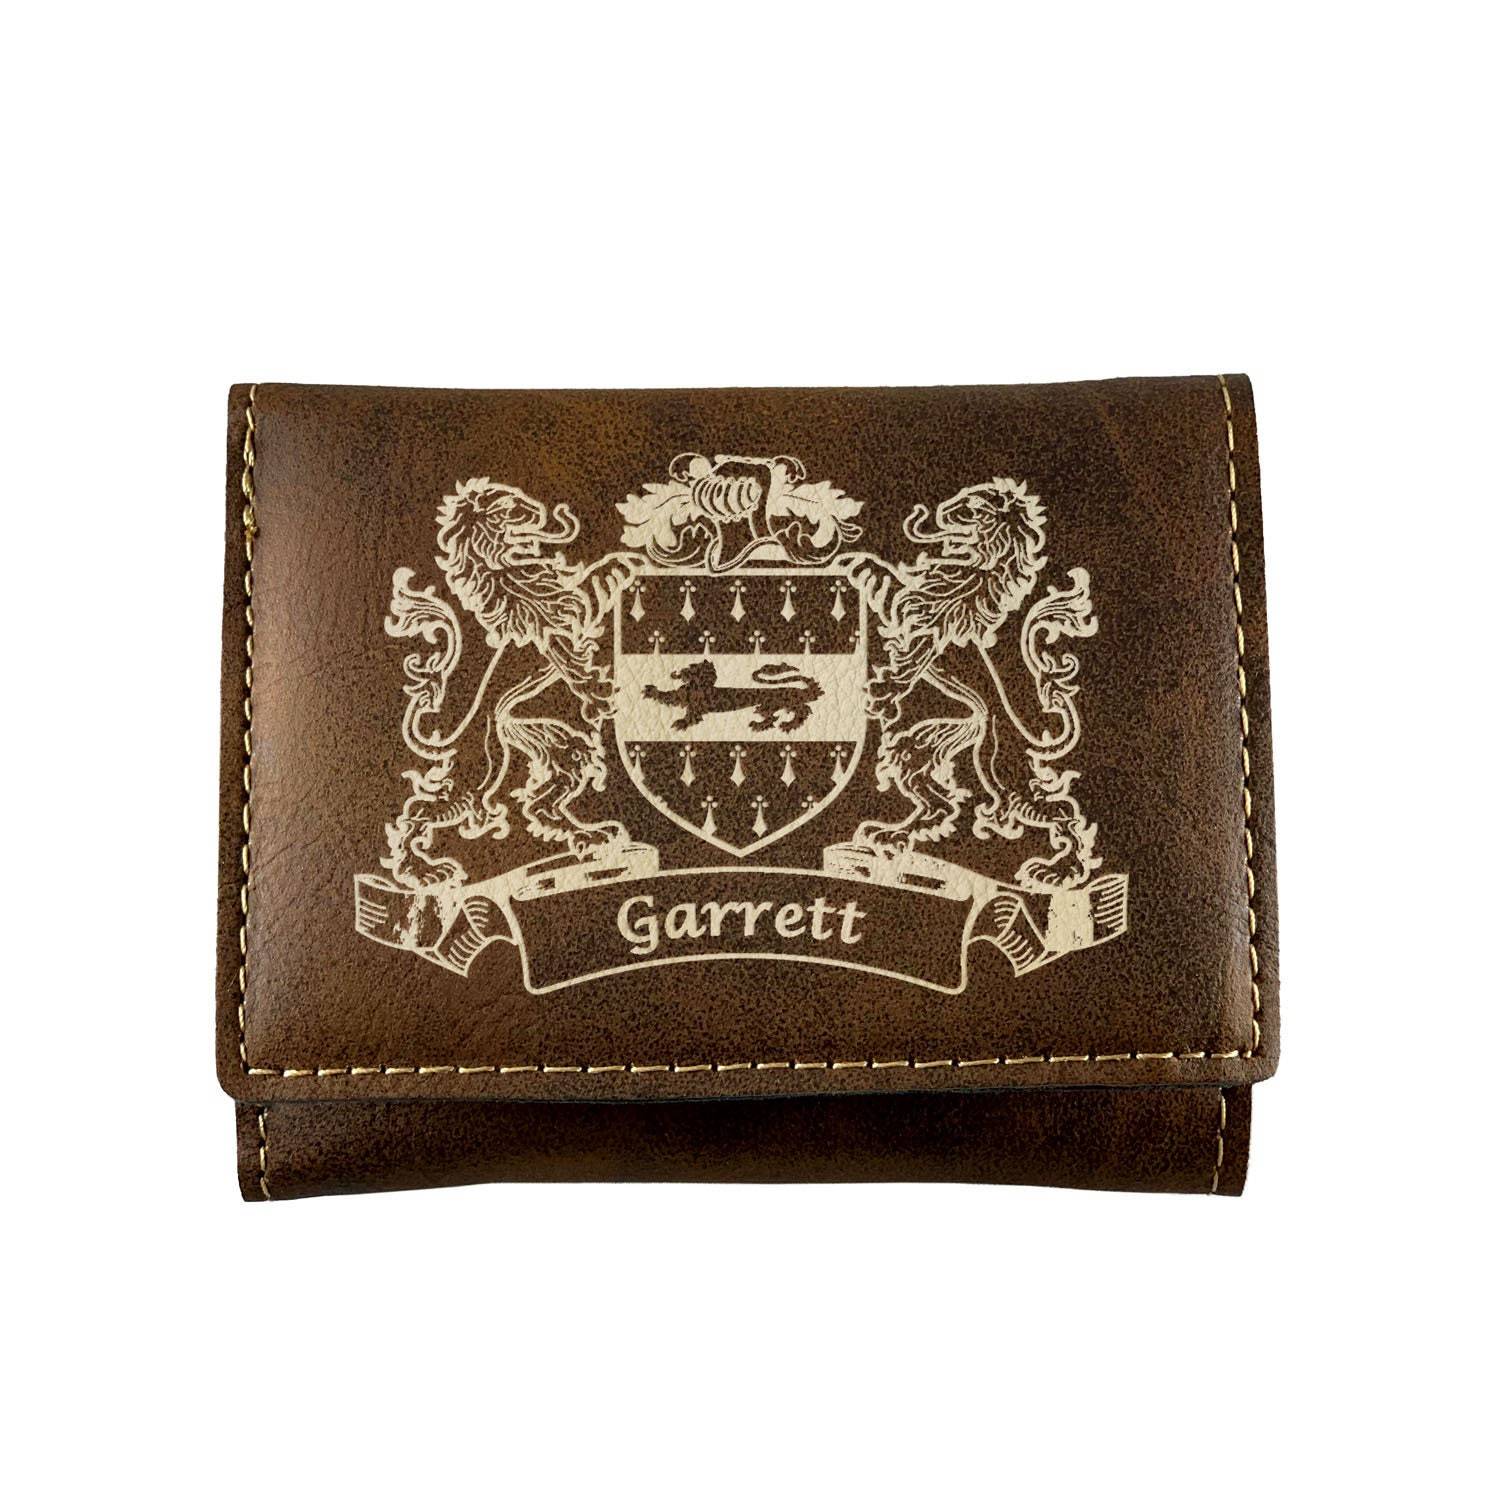 Garrett Irish Coat of Arms Rustic Leather Wallet